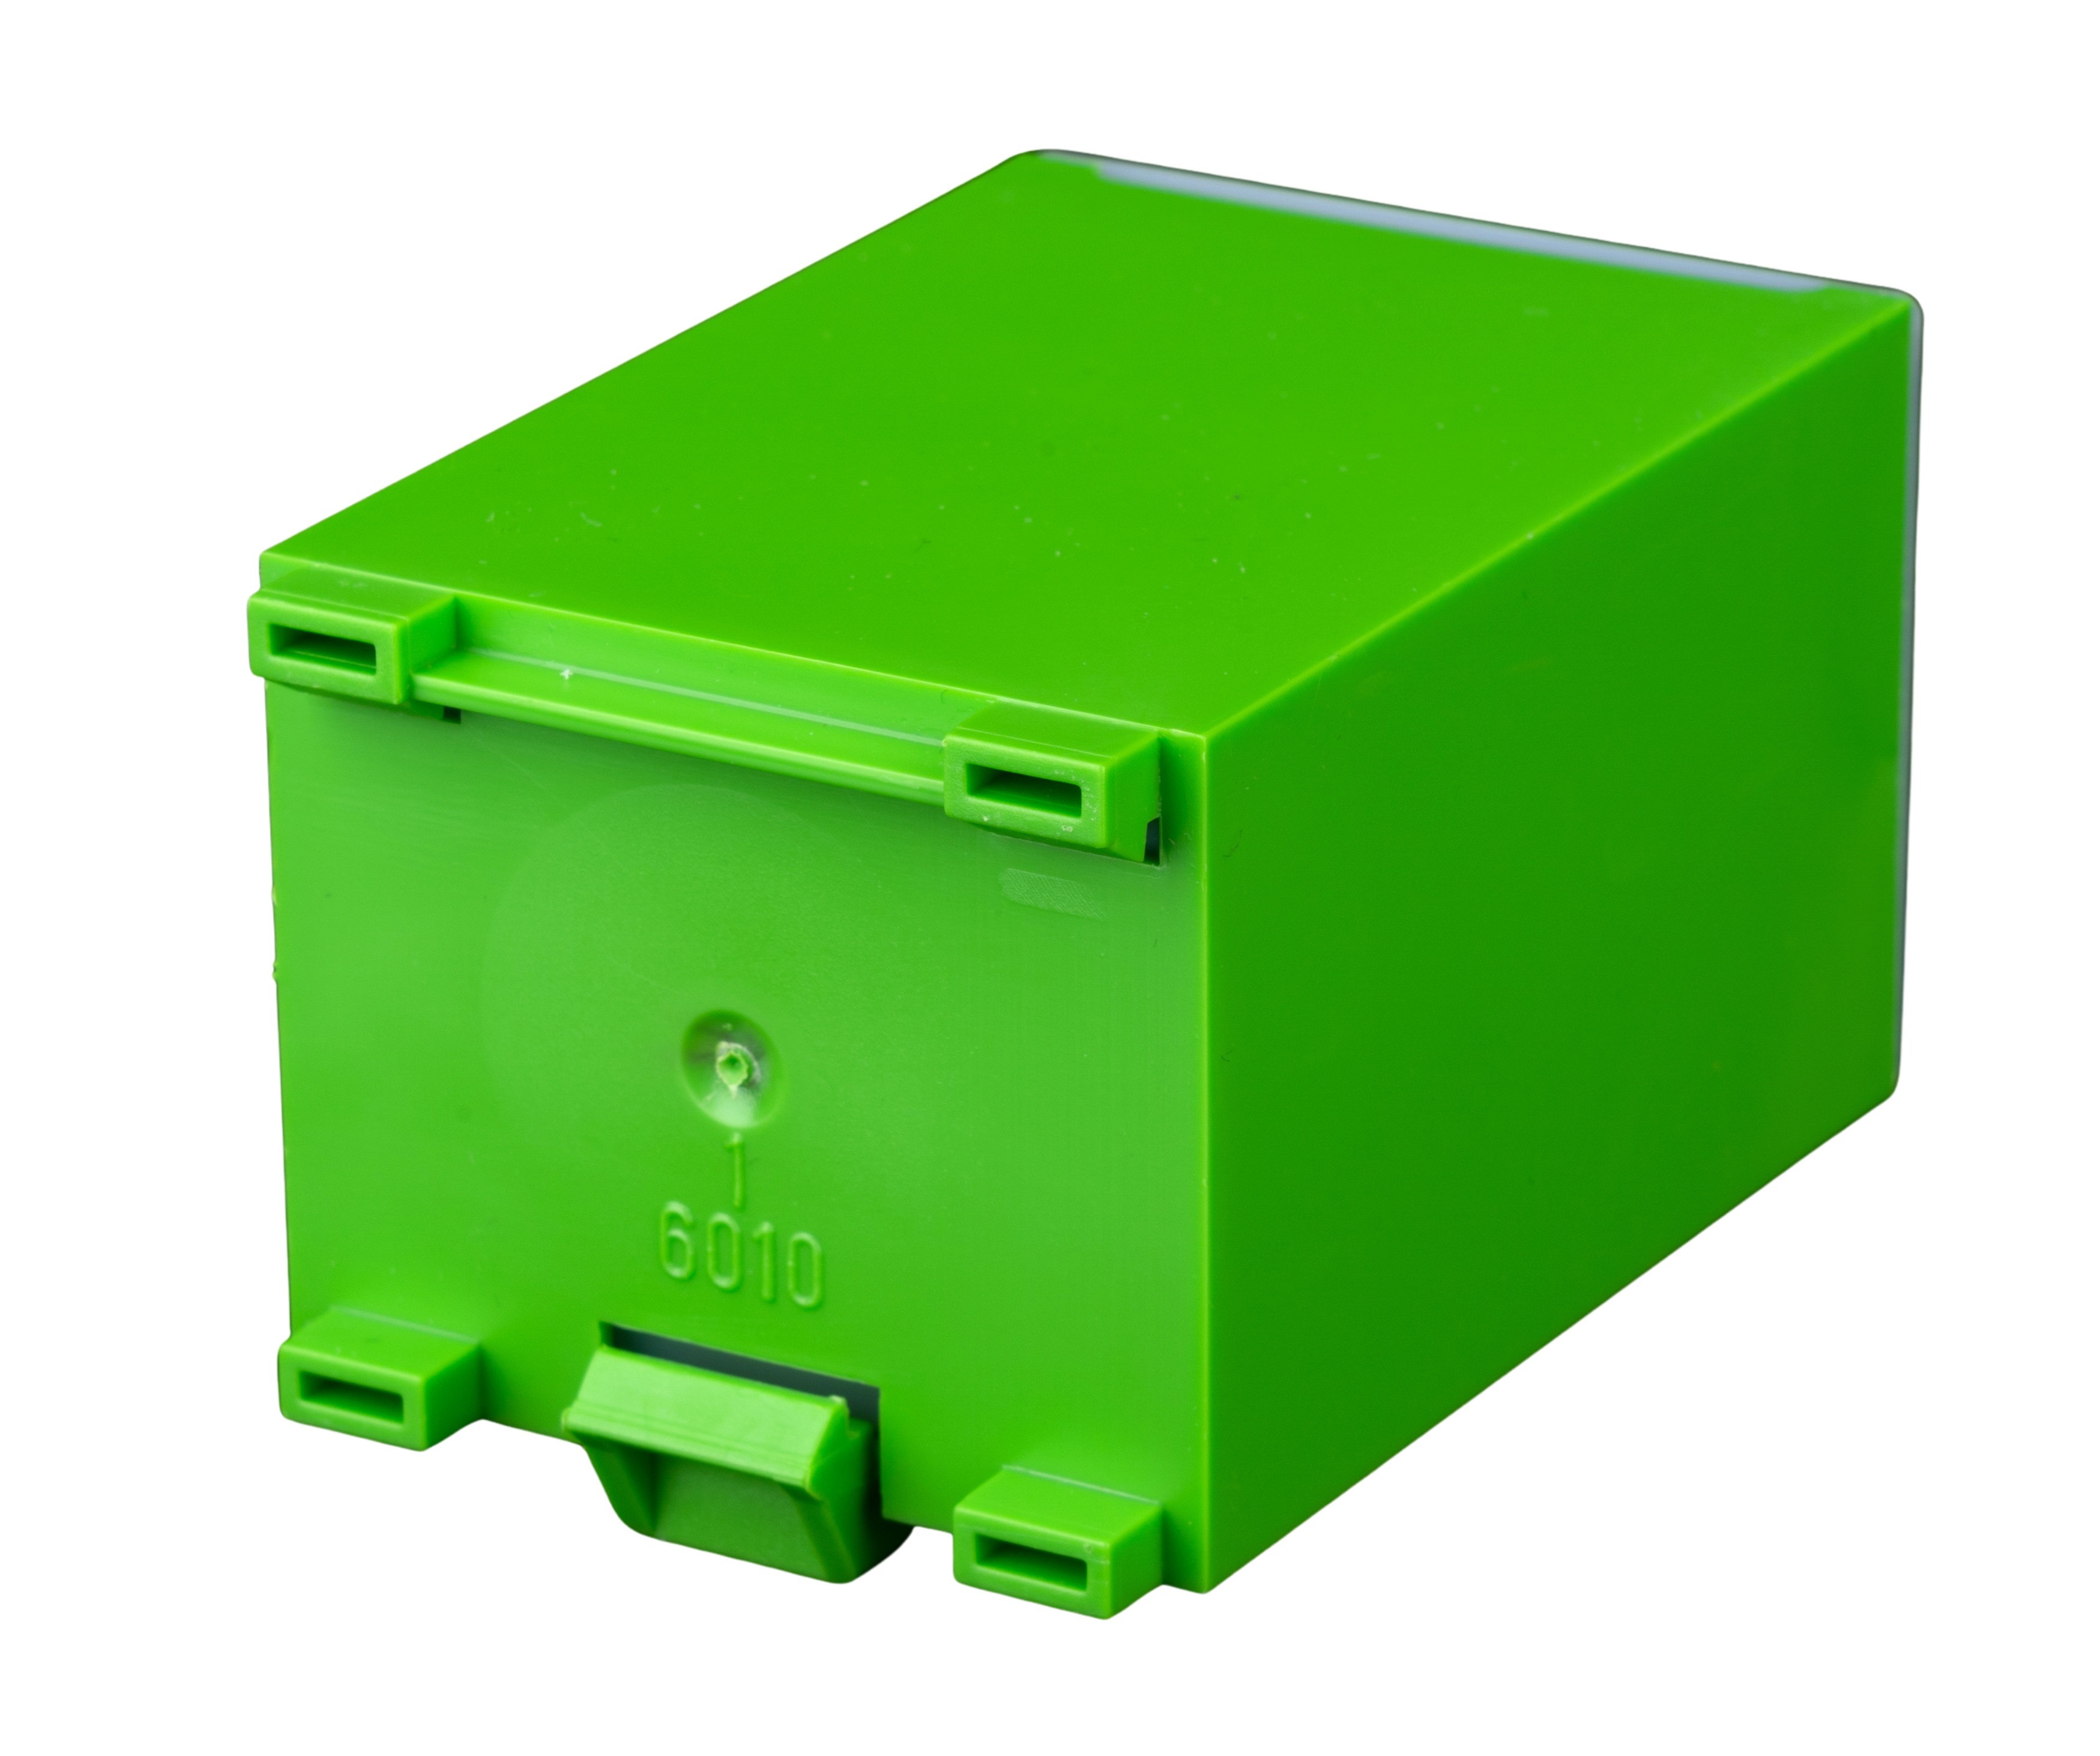 Servicebox mit 12 Sicherungseinsätzen D02 / 40A, grün